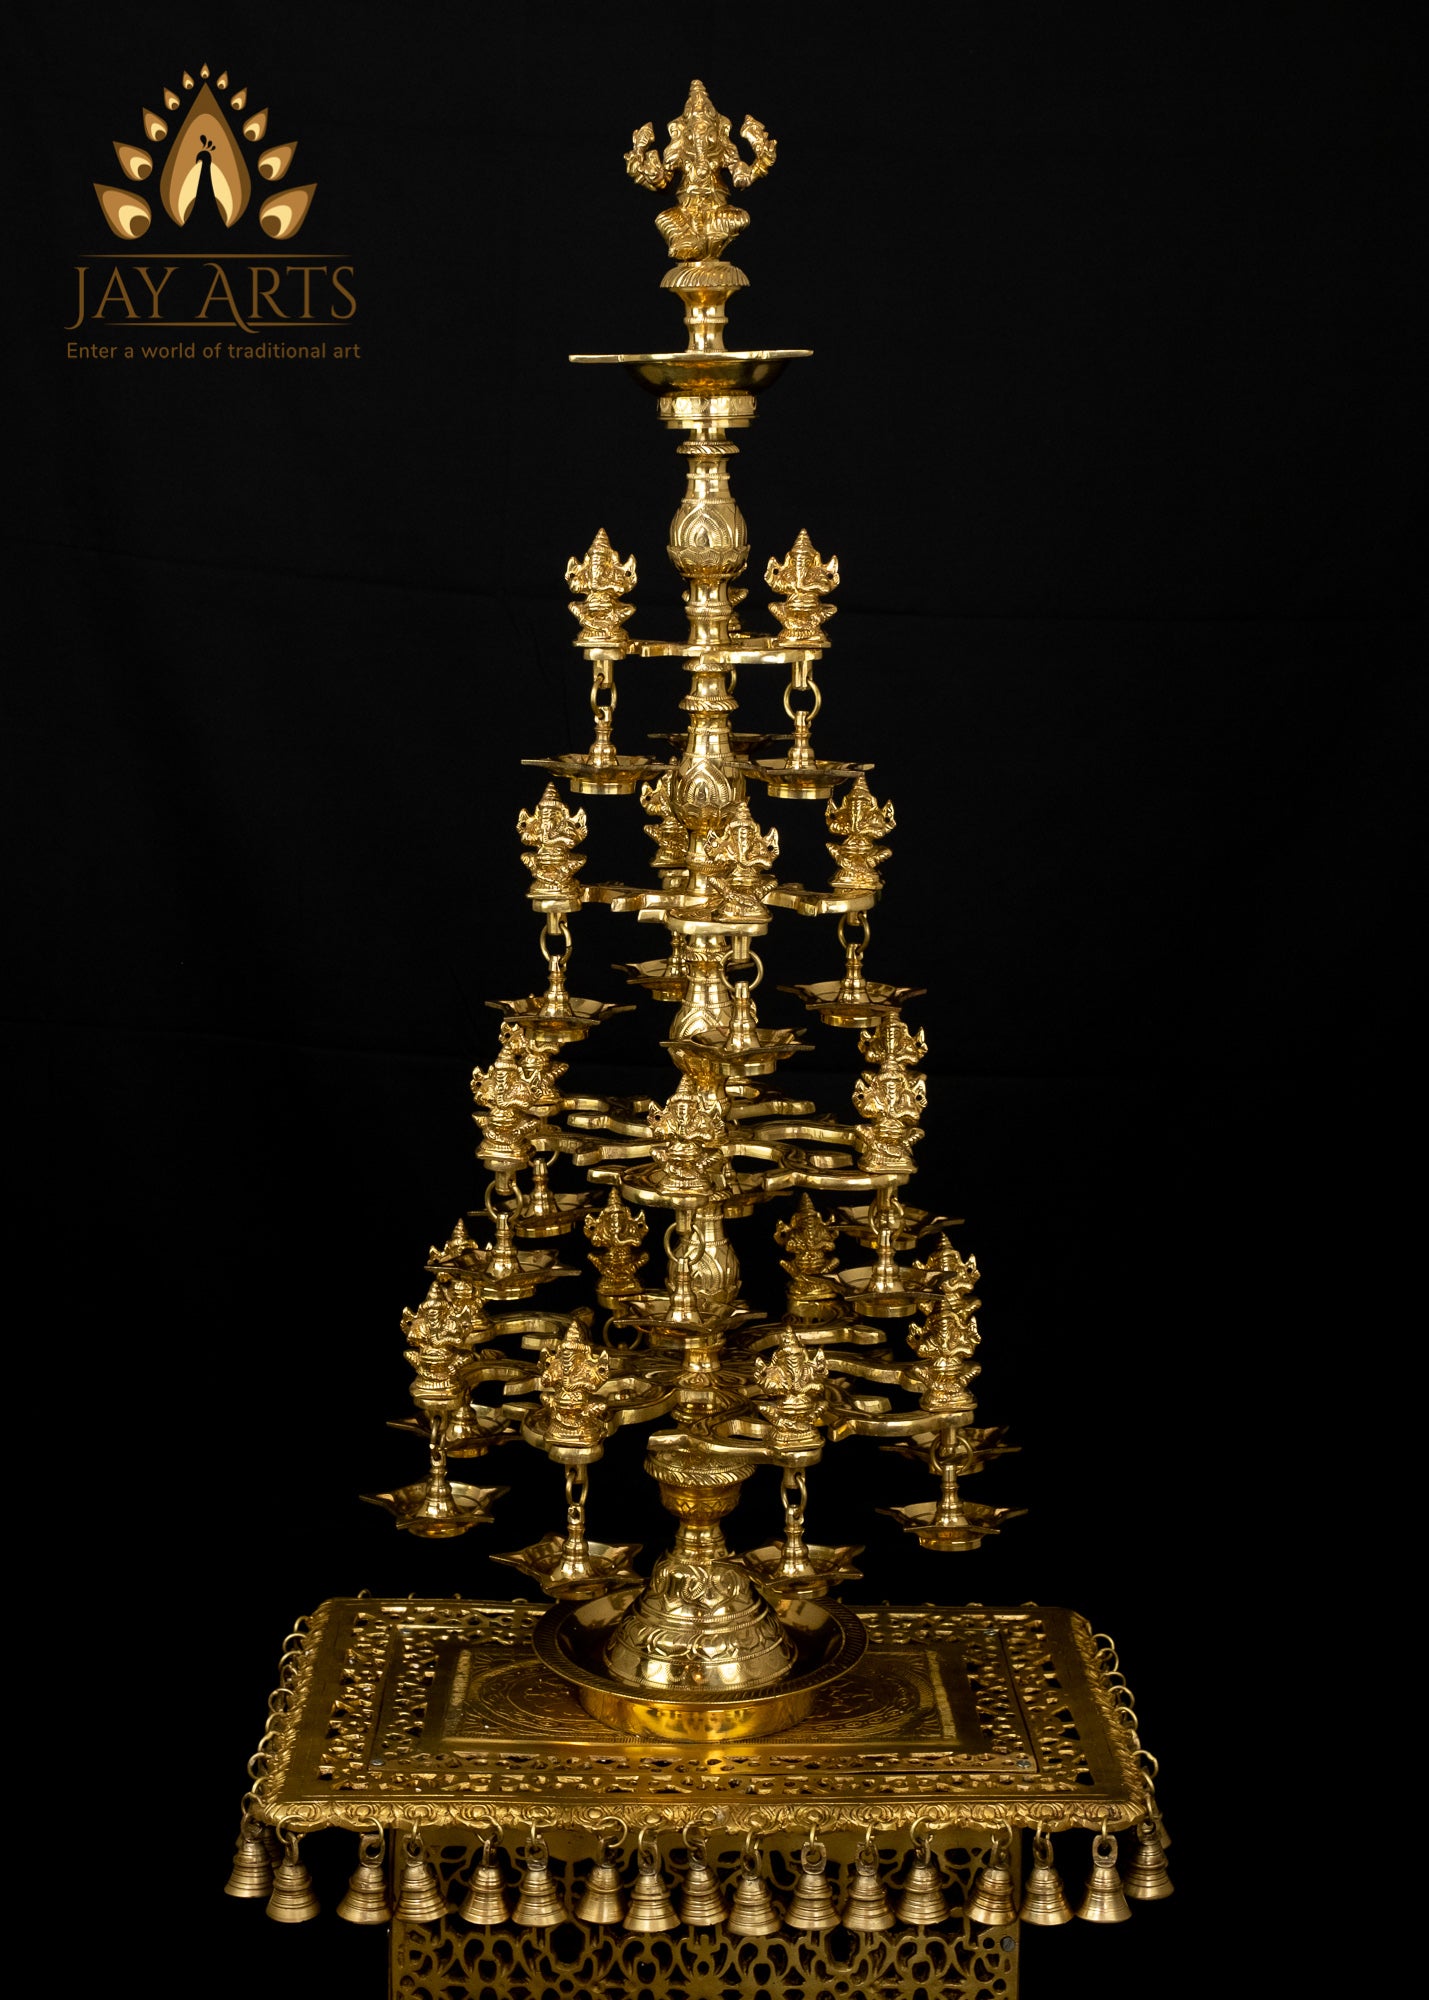 Lord Ganesh Multilayer Designer Lamp with Twenty Two Ganeshas